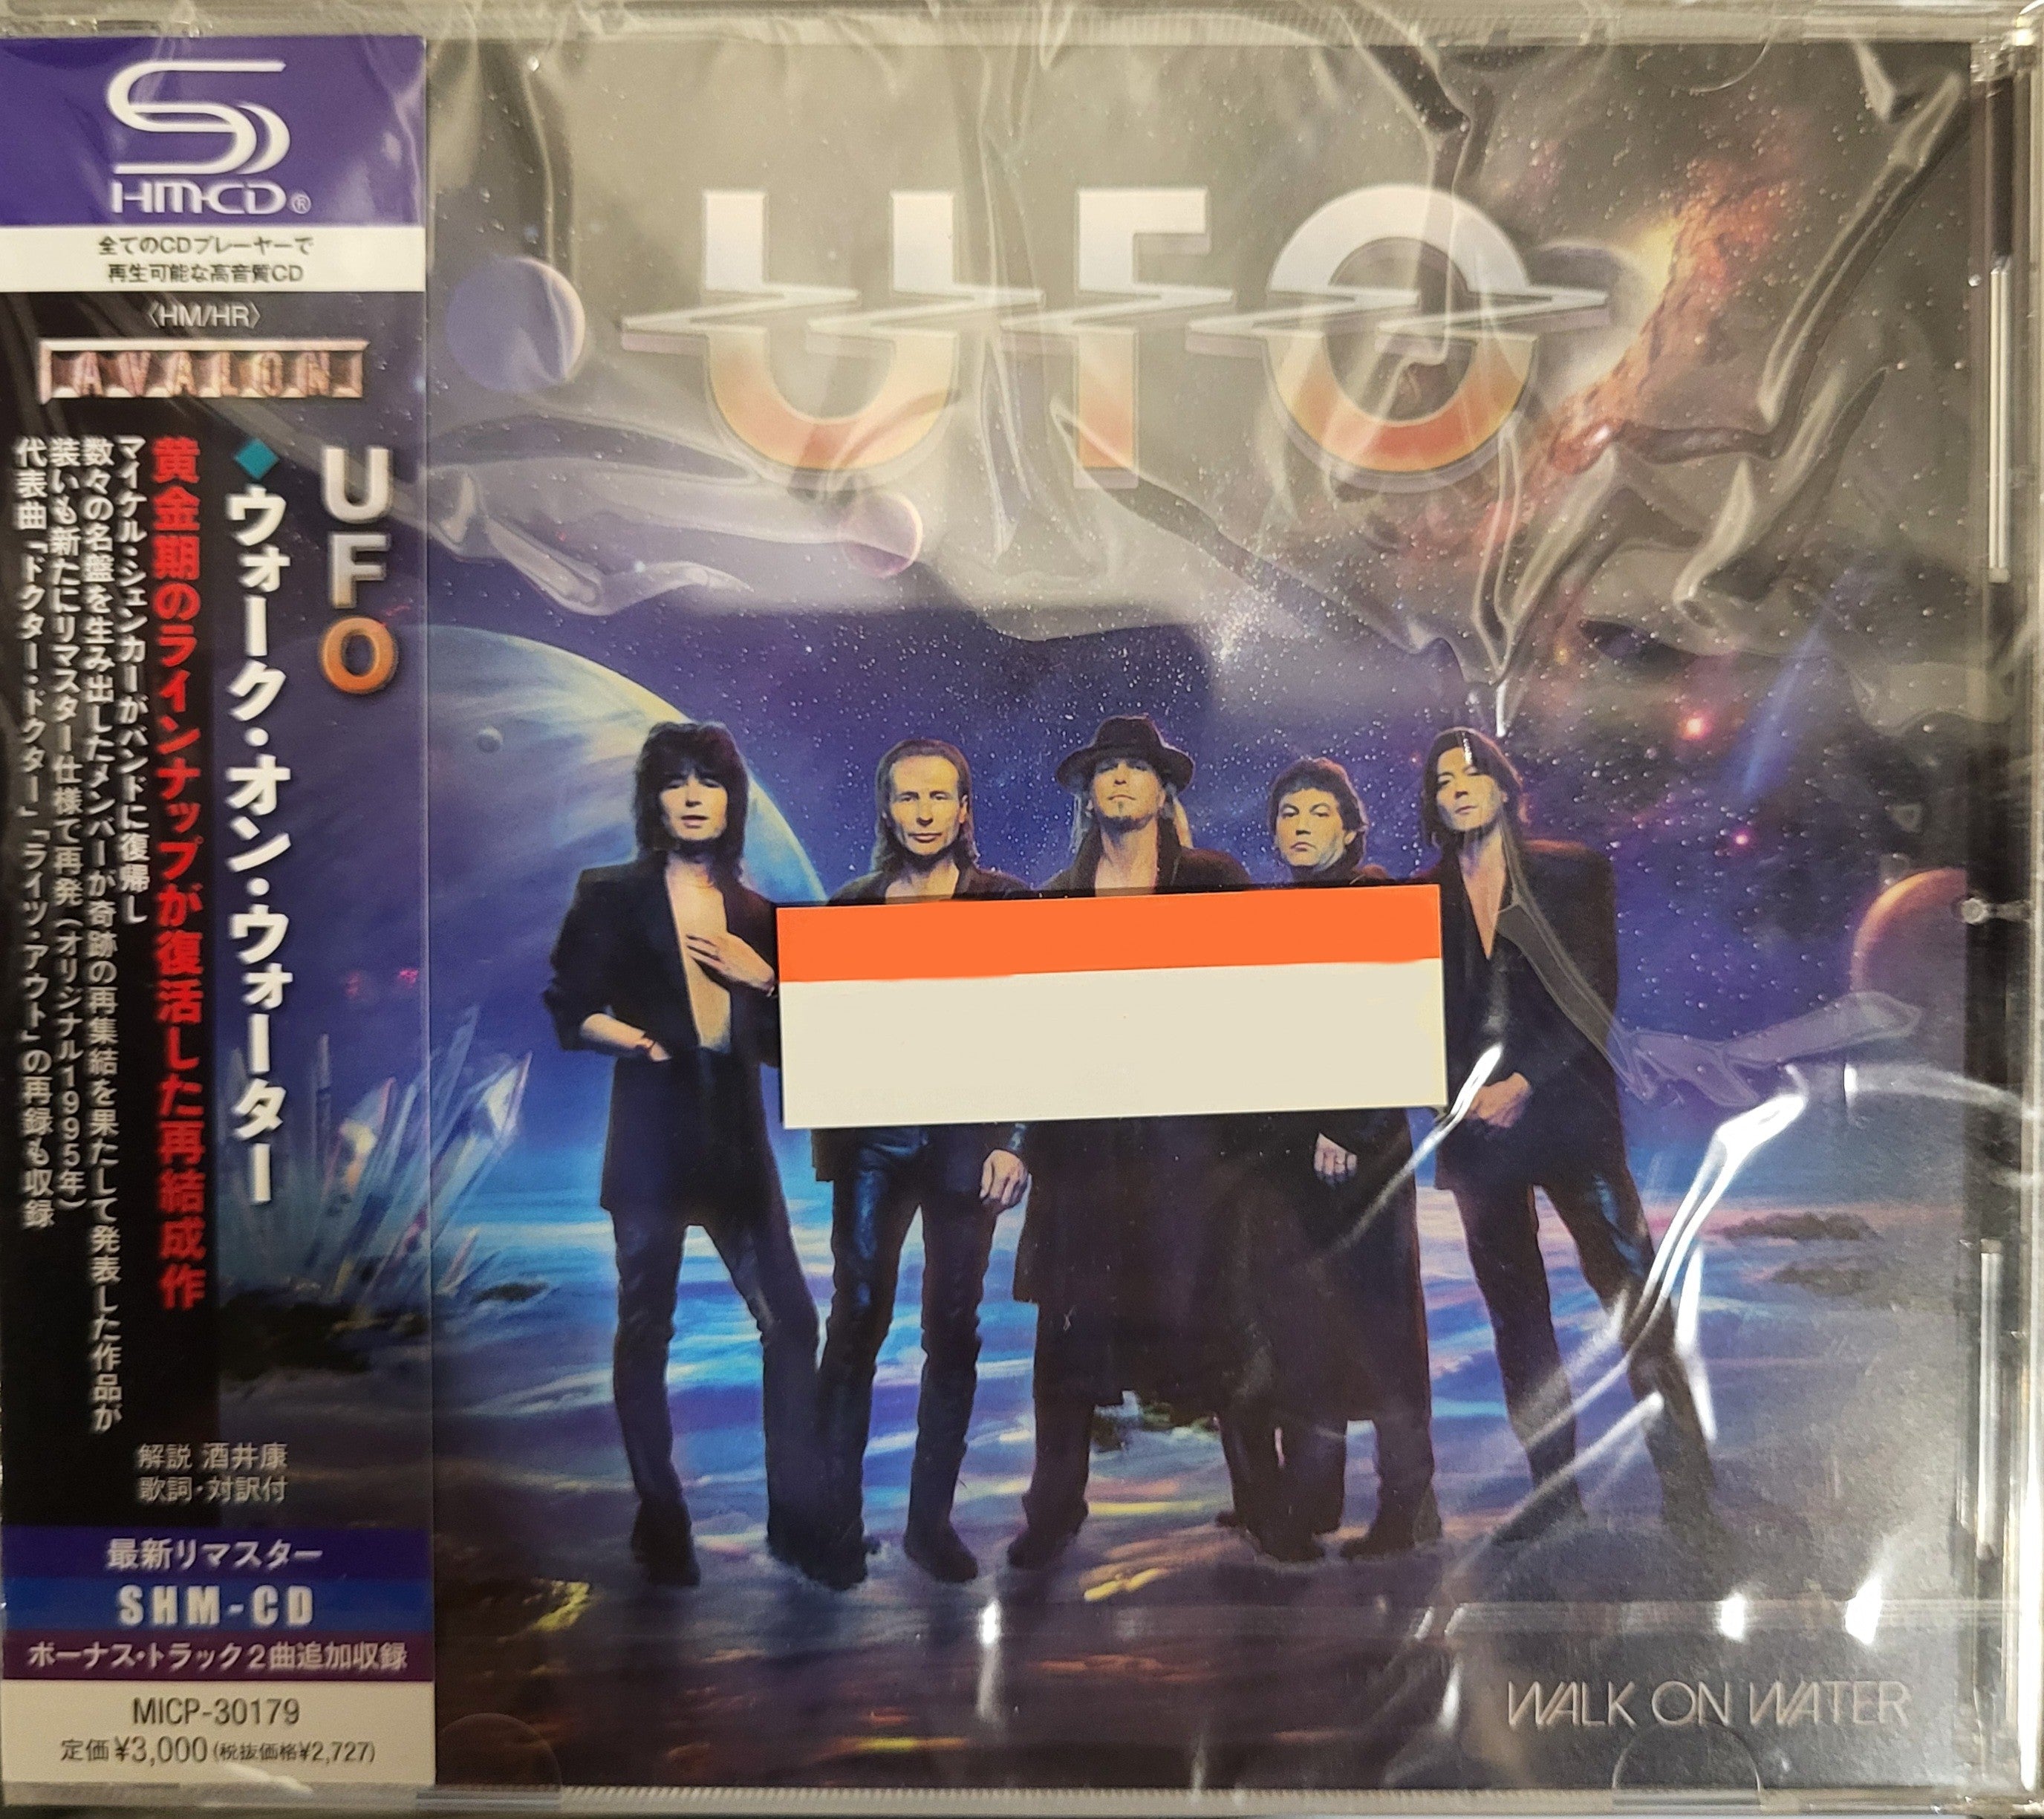 UFO - Walk On Water (SHM-CD - Japanese Import)